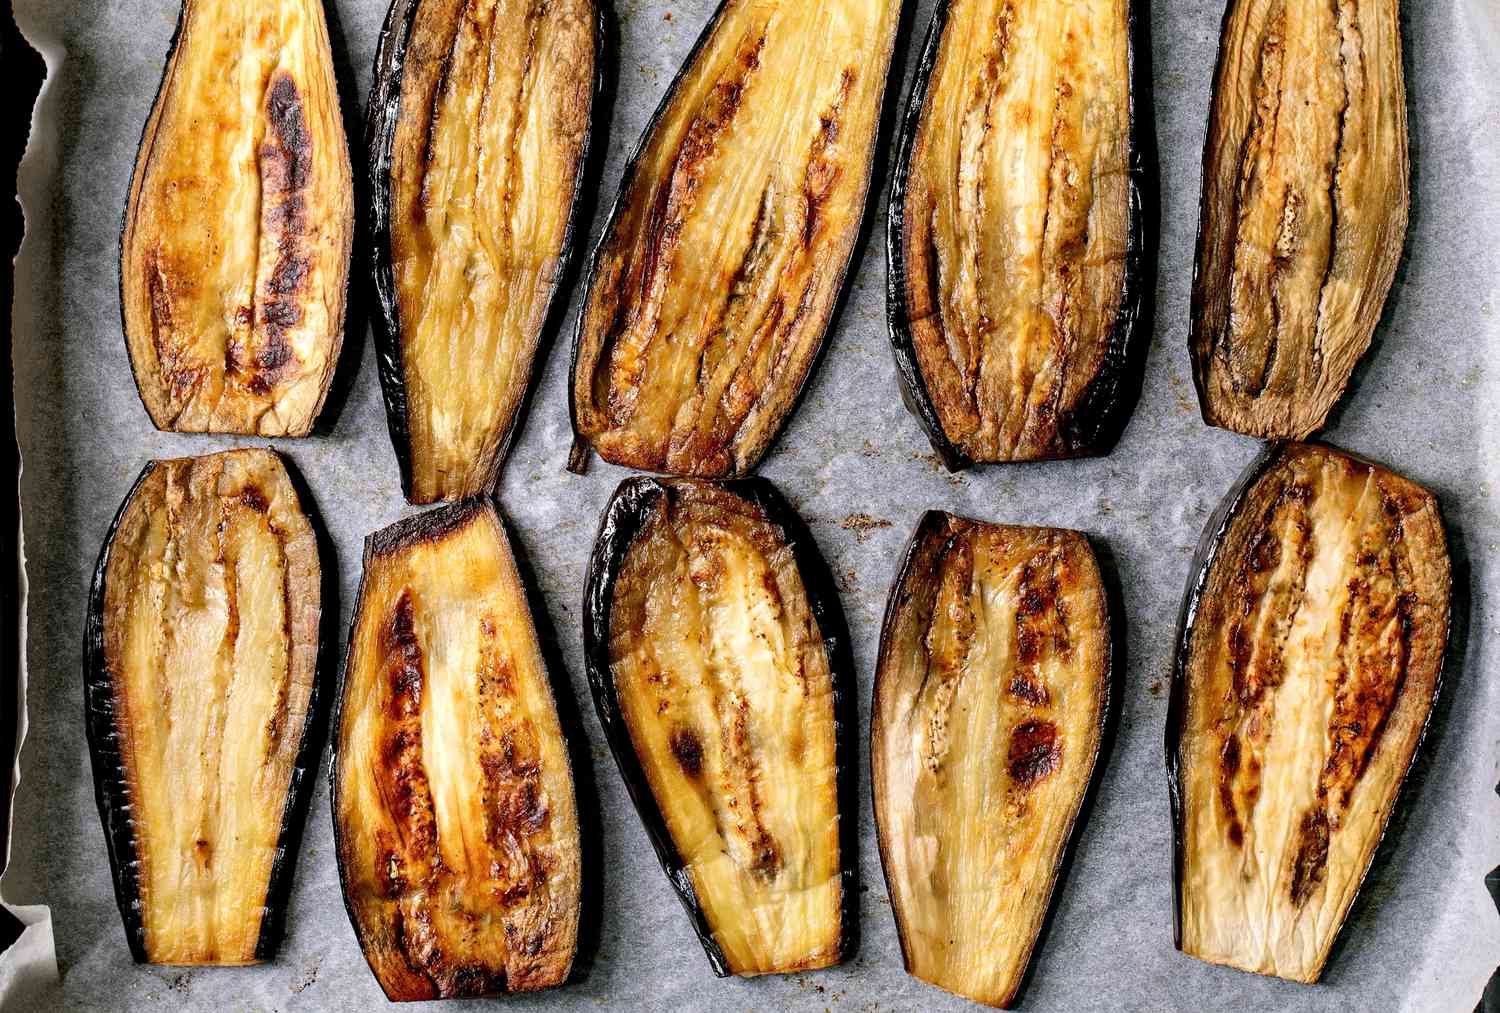 How to Prepare Eggplant So It’s Crisp, Not Soggy